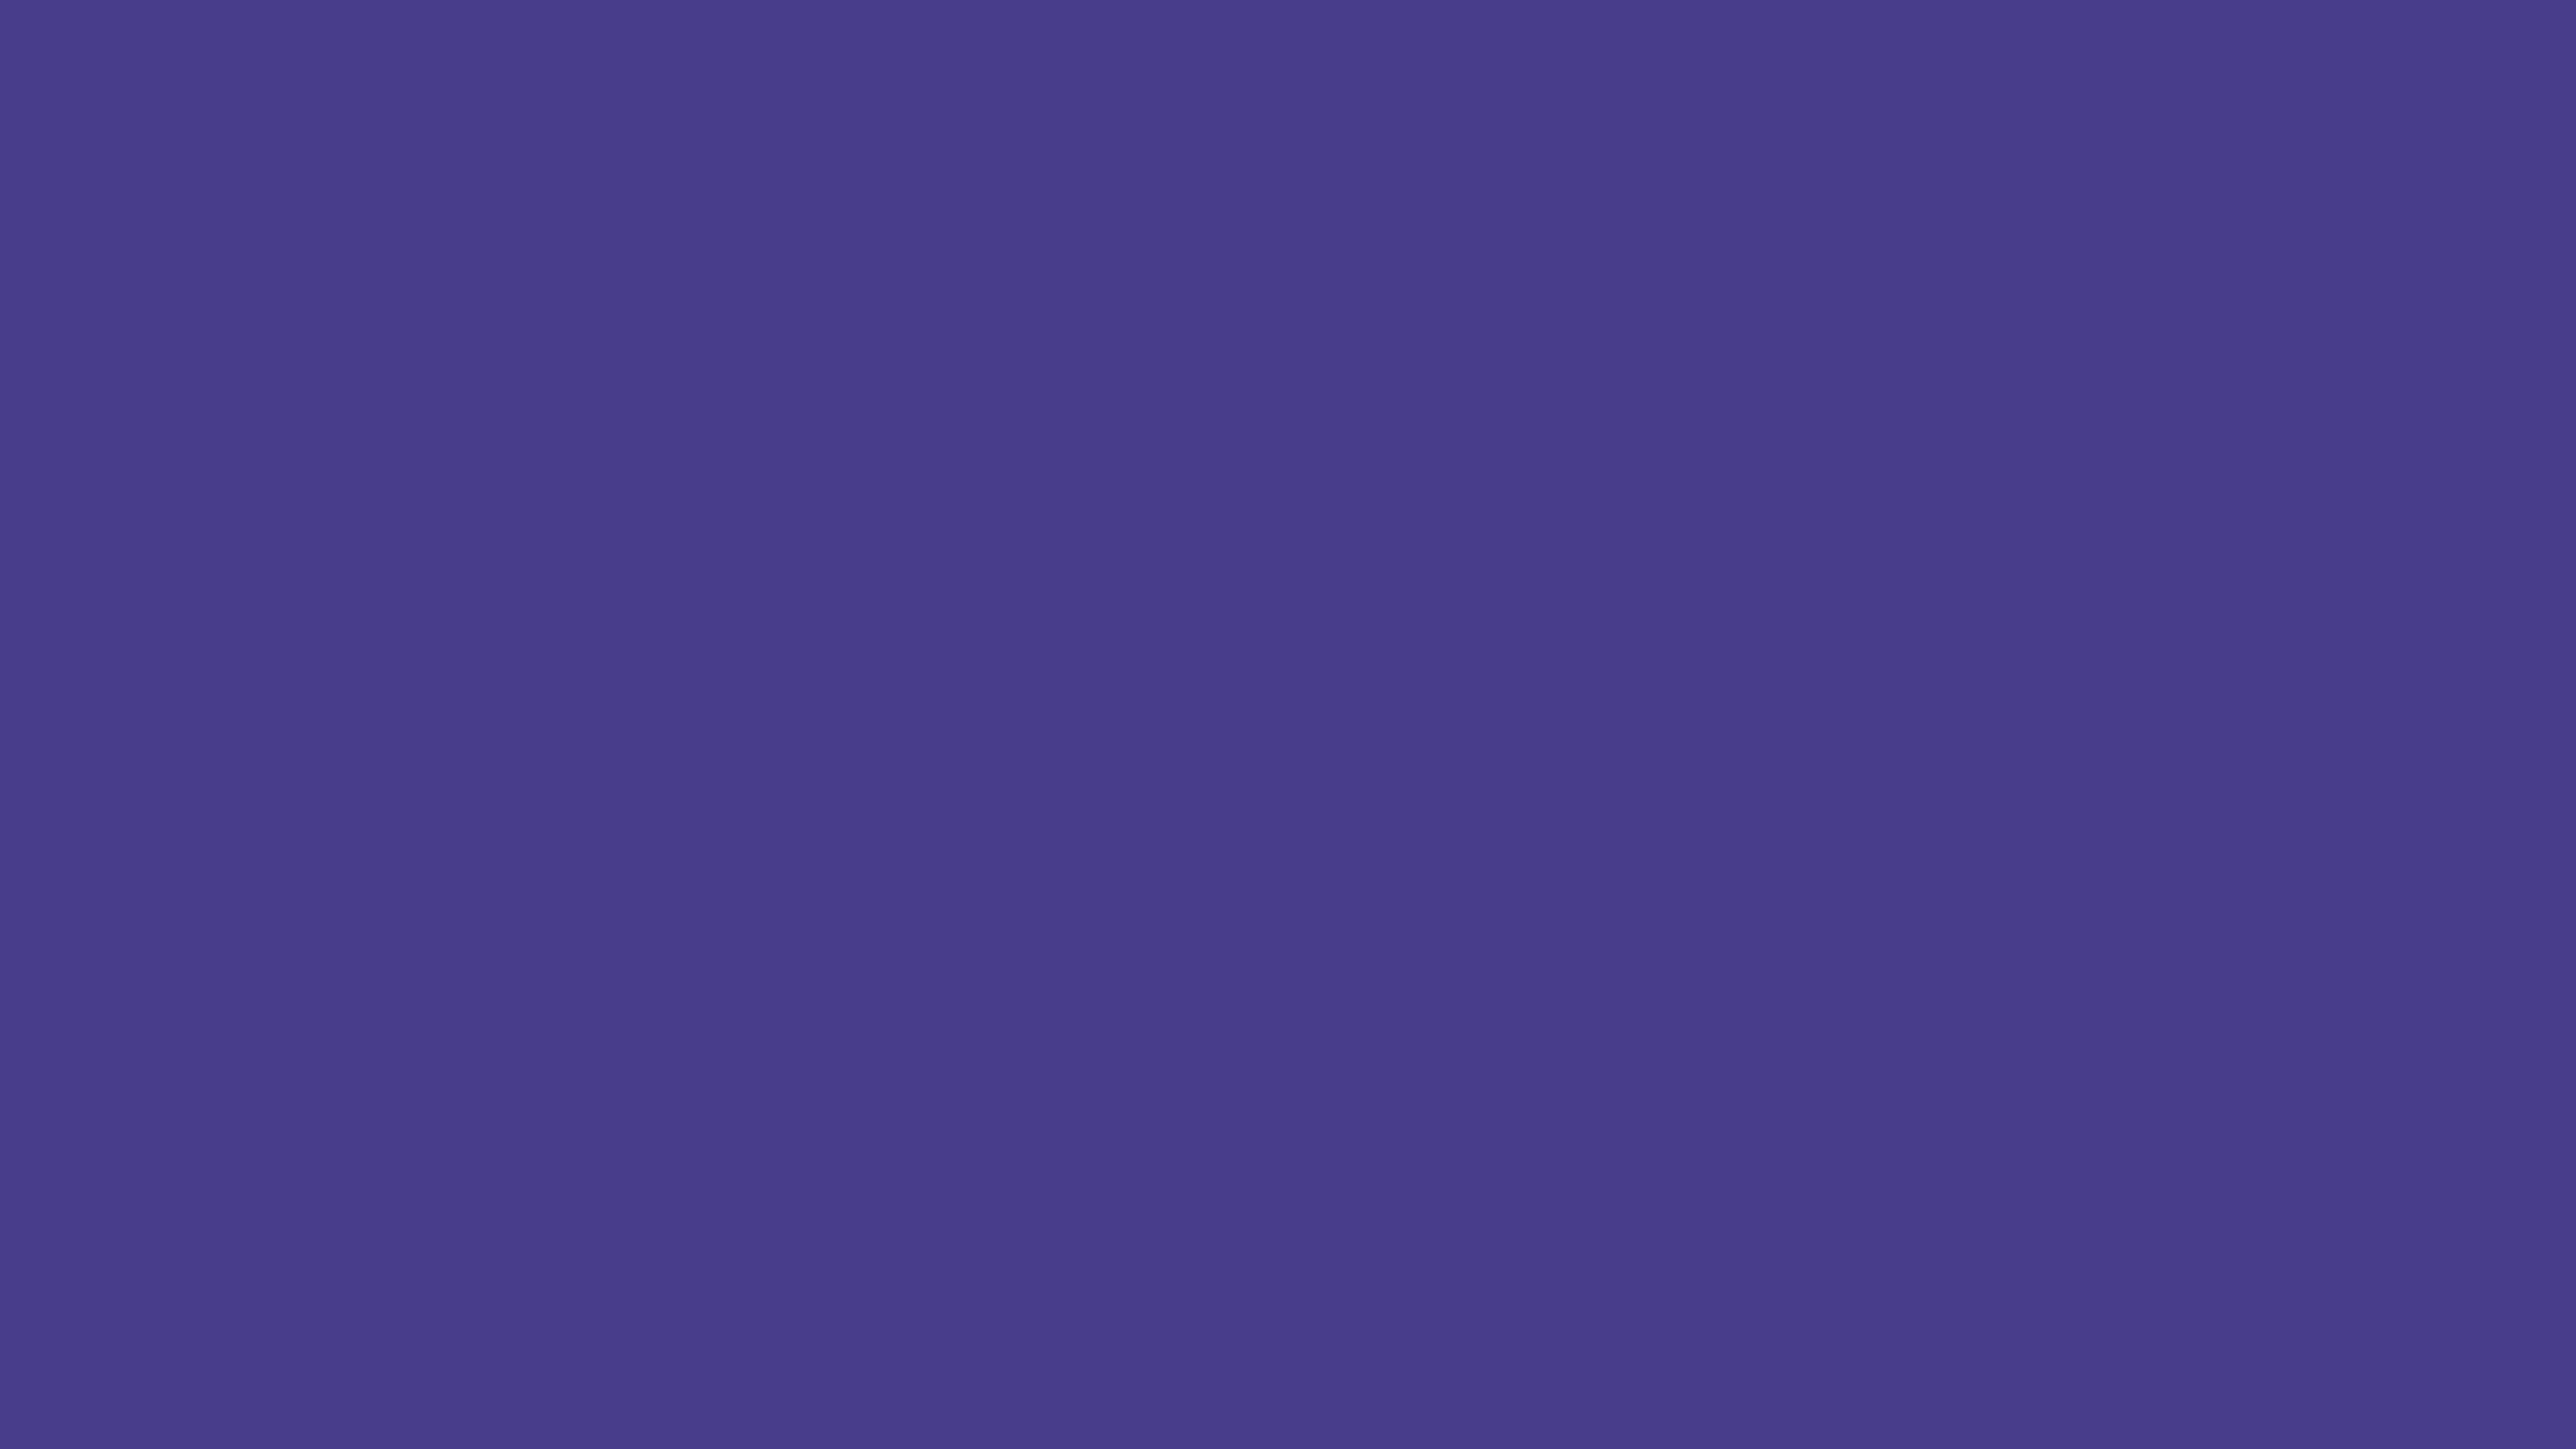 7680x4320 Dark Slate Blue Solid Color Background